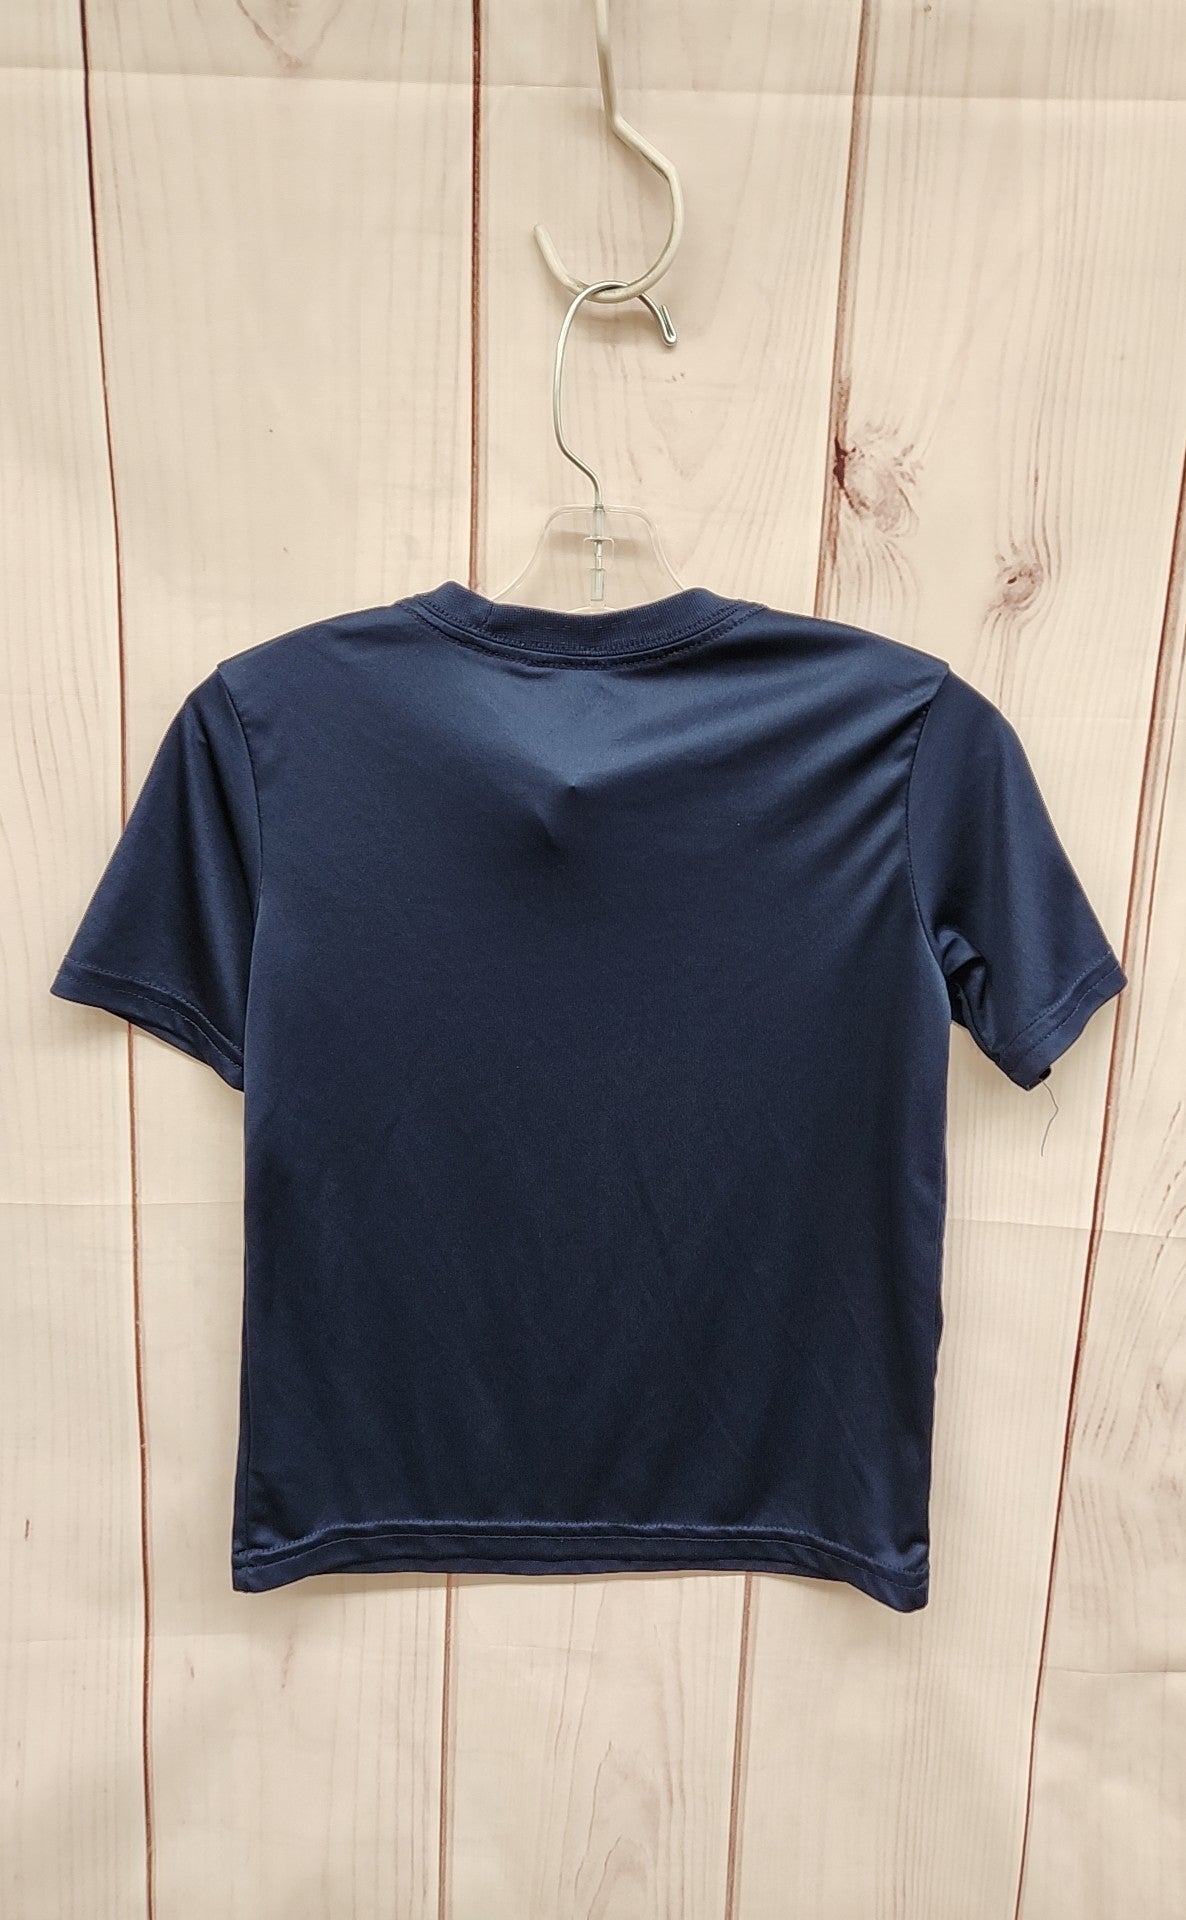 Athletic Works Boy's Size 6/7 Blue Shirt